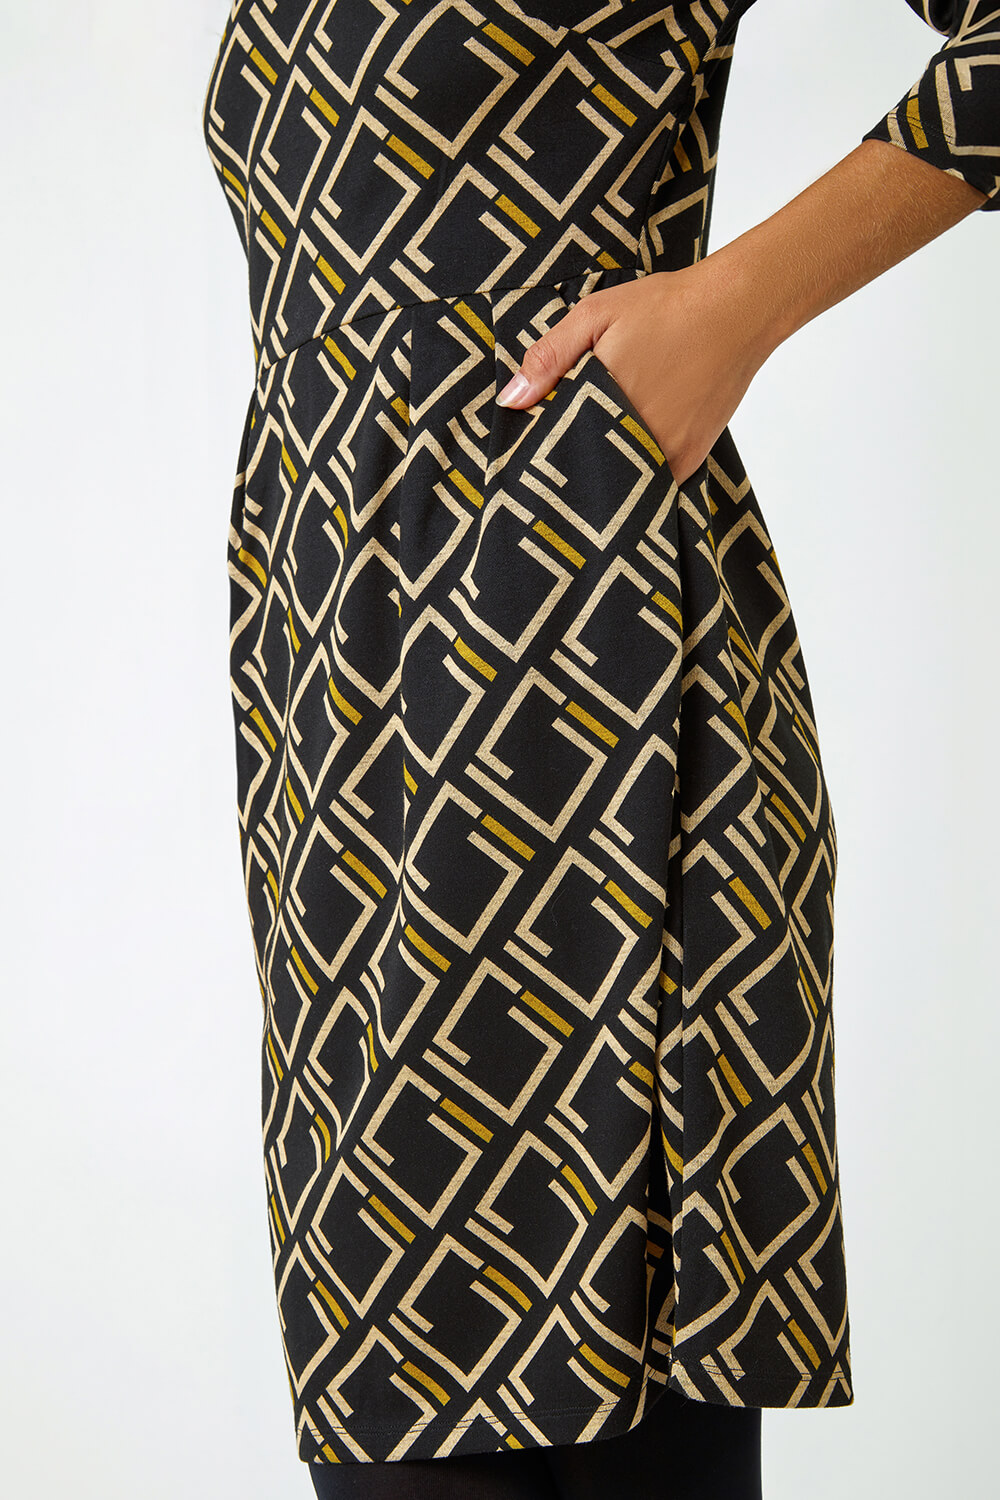 Yellow Geometric Print Pocket Shift Dress, Image 5 of 5